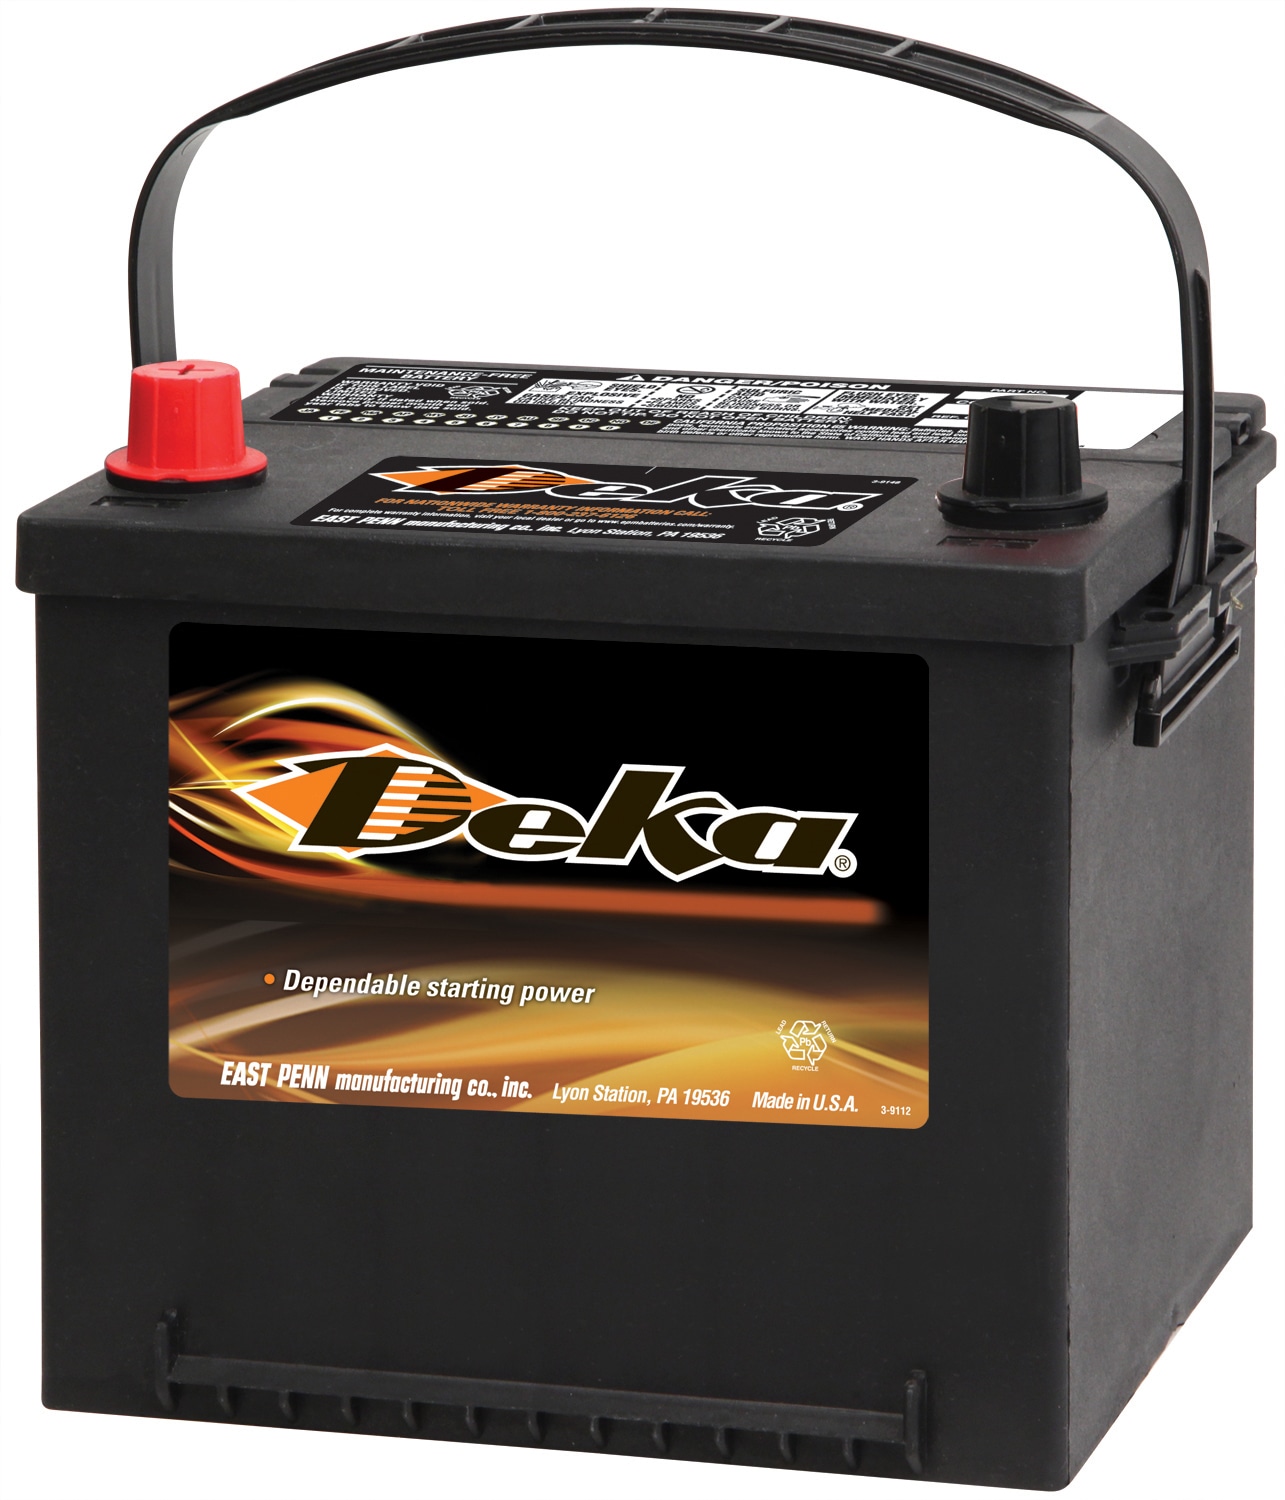 30 lb. Power Equipment Batteries at